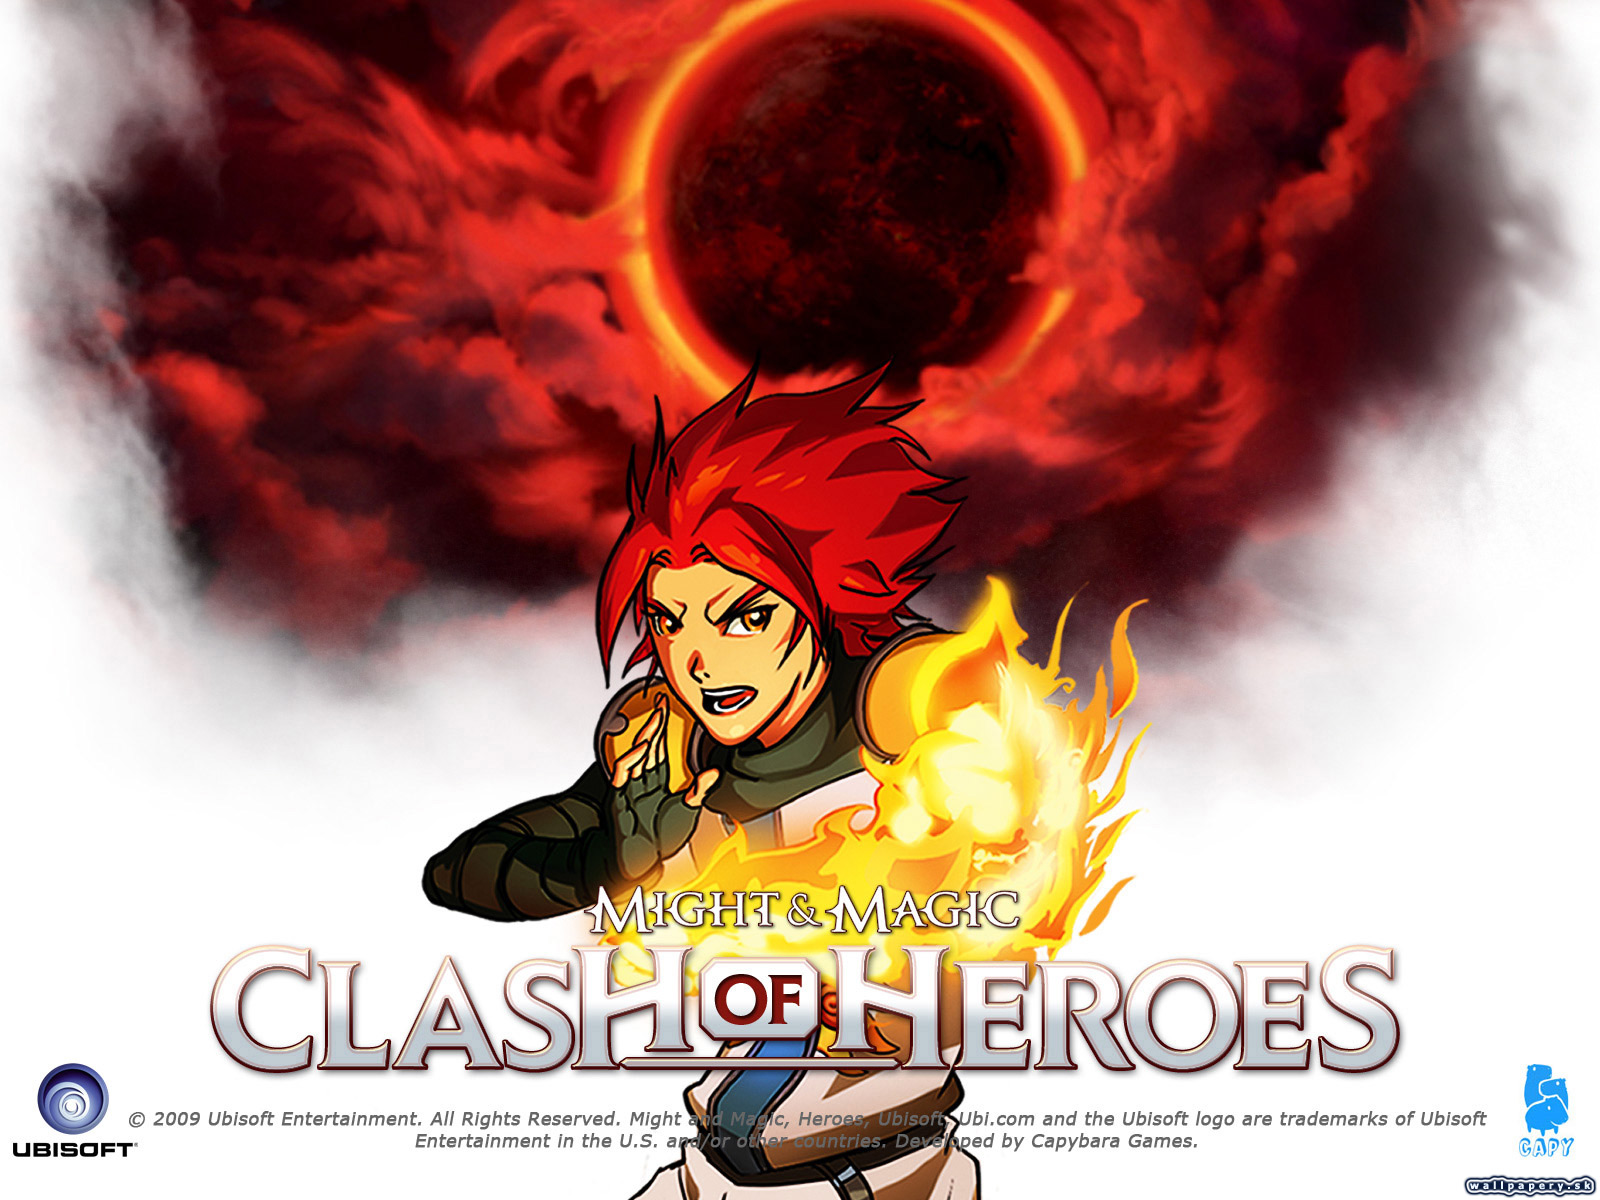 Might & Magic: Clash of Heroes - wallpaper 5